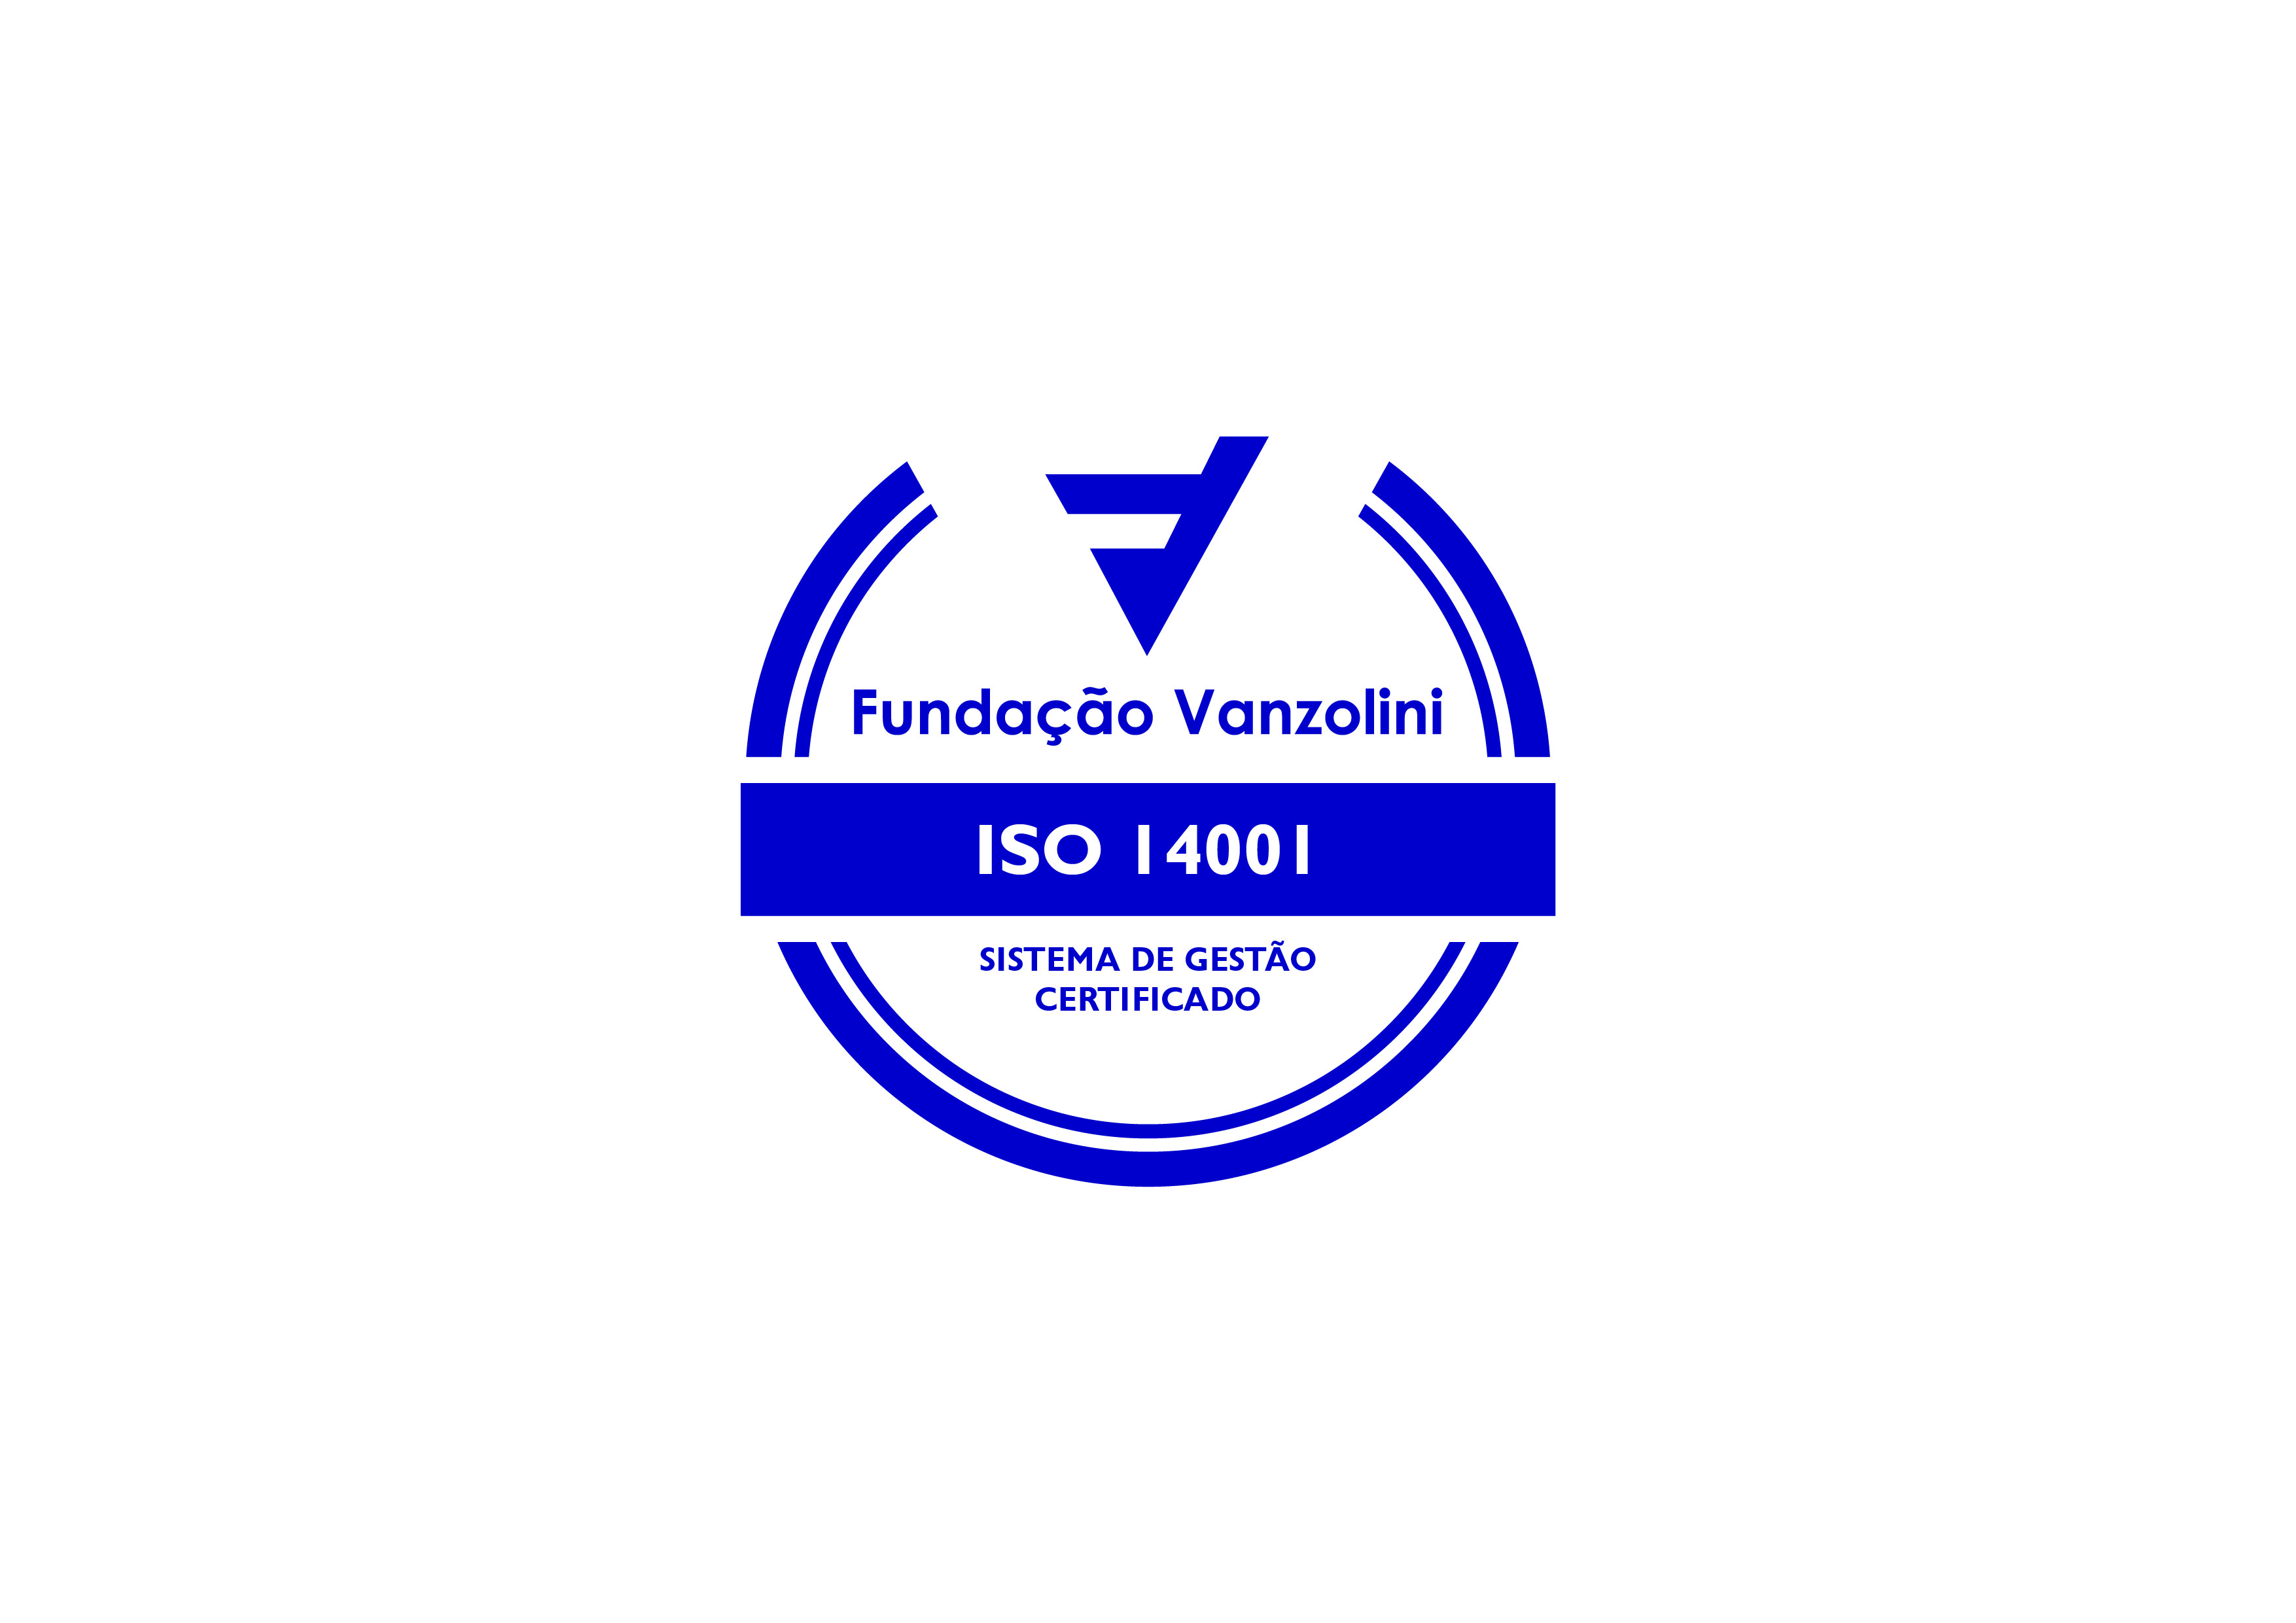 Vanzolini Foundation NBR ISO 14001:2015 Environmental Management System, certificate SGA-1868